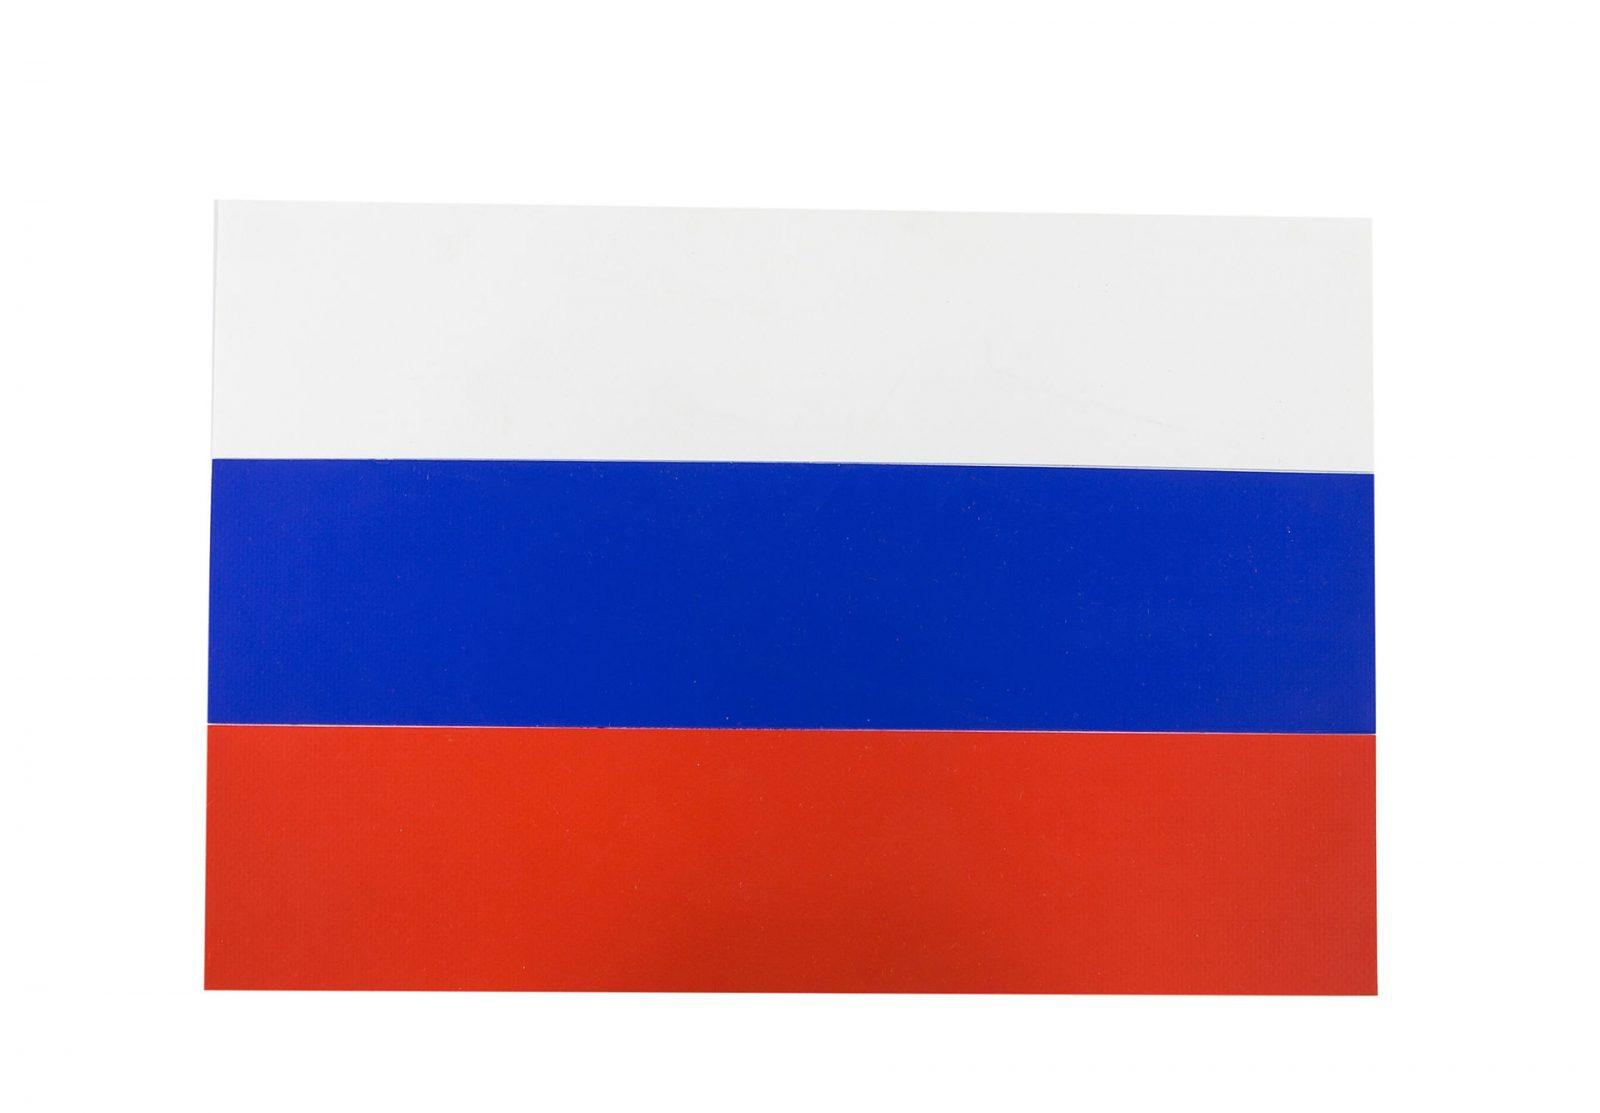 Рф цветной. Флаг России. Флаг Триколор России. Ф̆̈л̆̈ӑ̈г̆̈ р̆̈о̆̈с̆̈с̆̈й̈й̈. Флаг России на белом фоне.